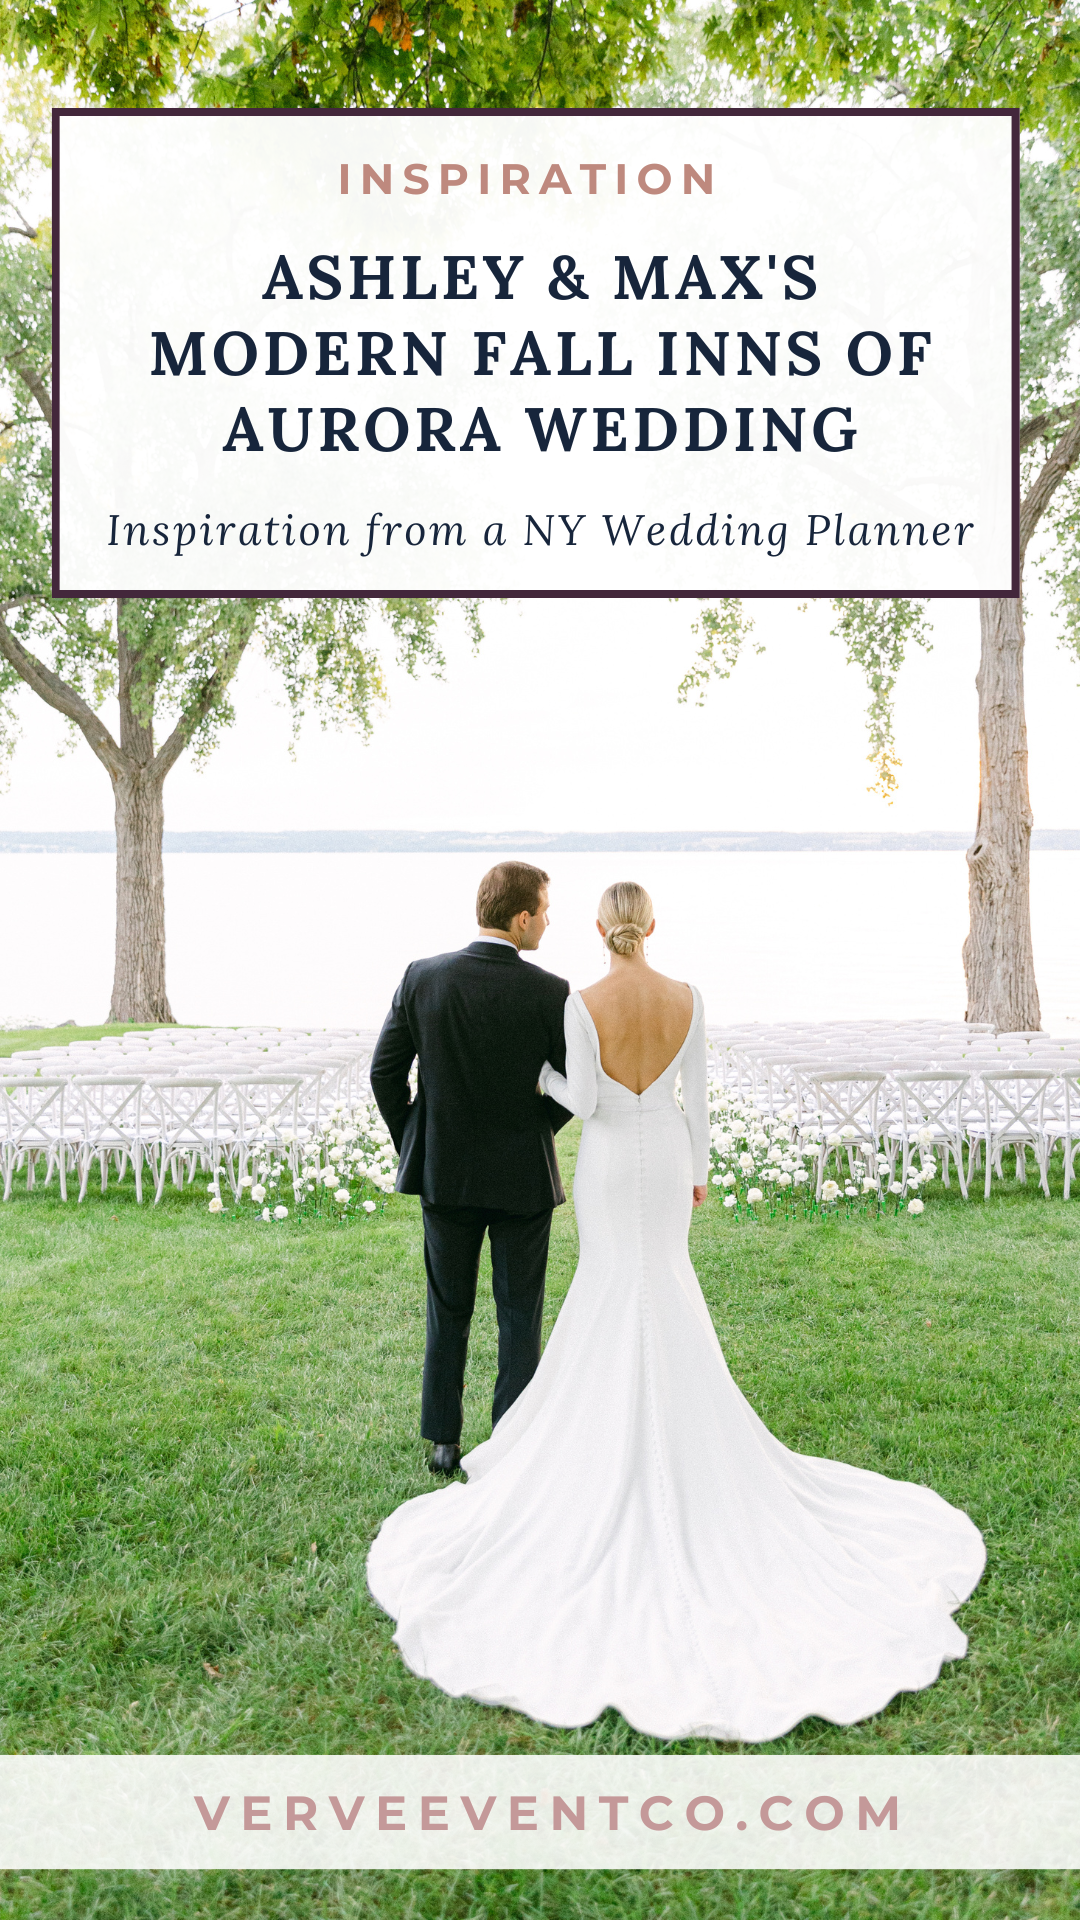  Ashley & Max's Modern Fall Inns of Aurora Wedding_Verve Event Co